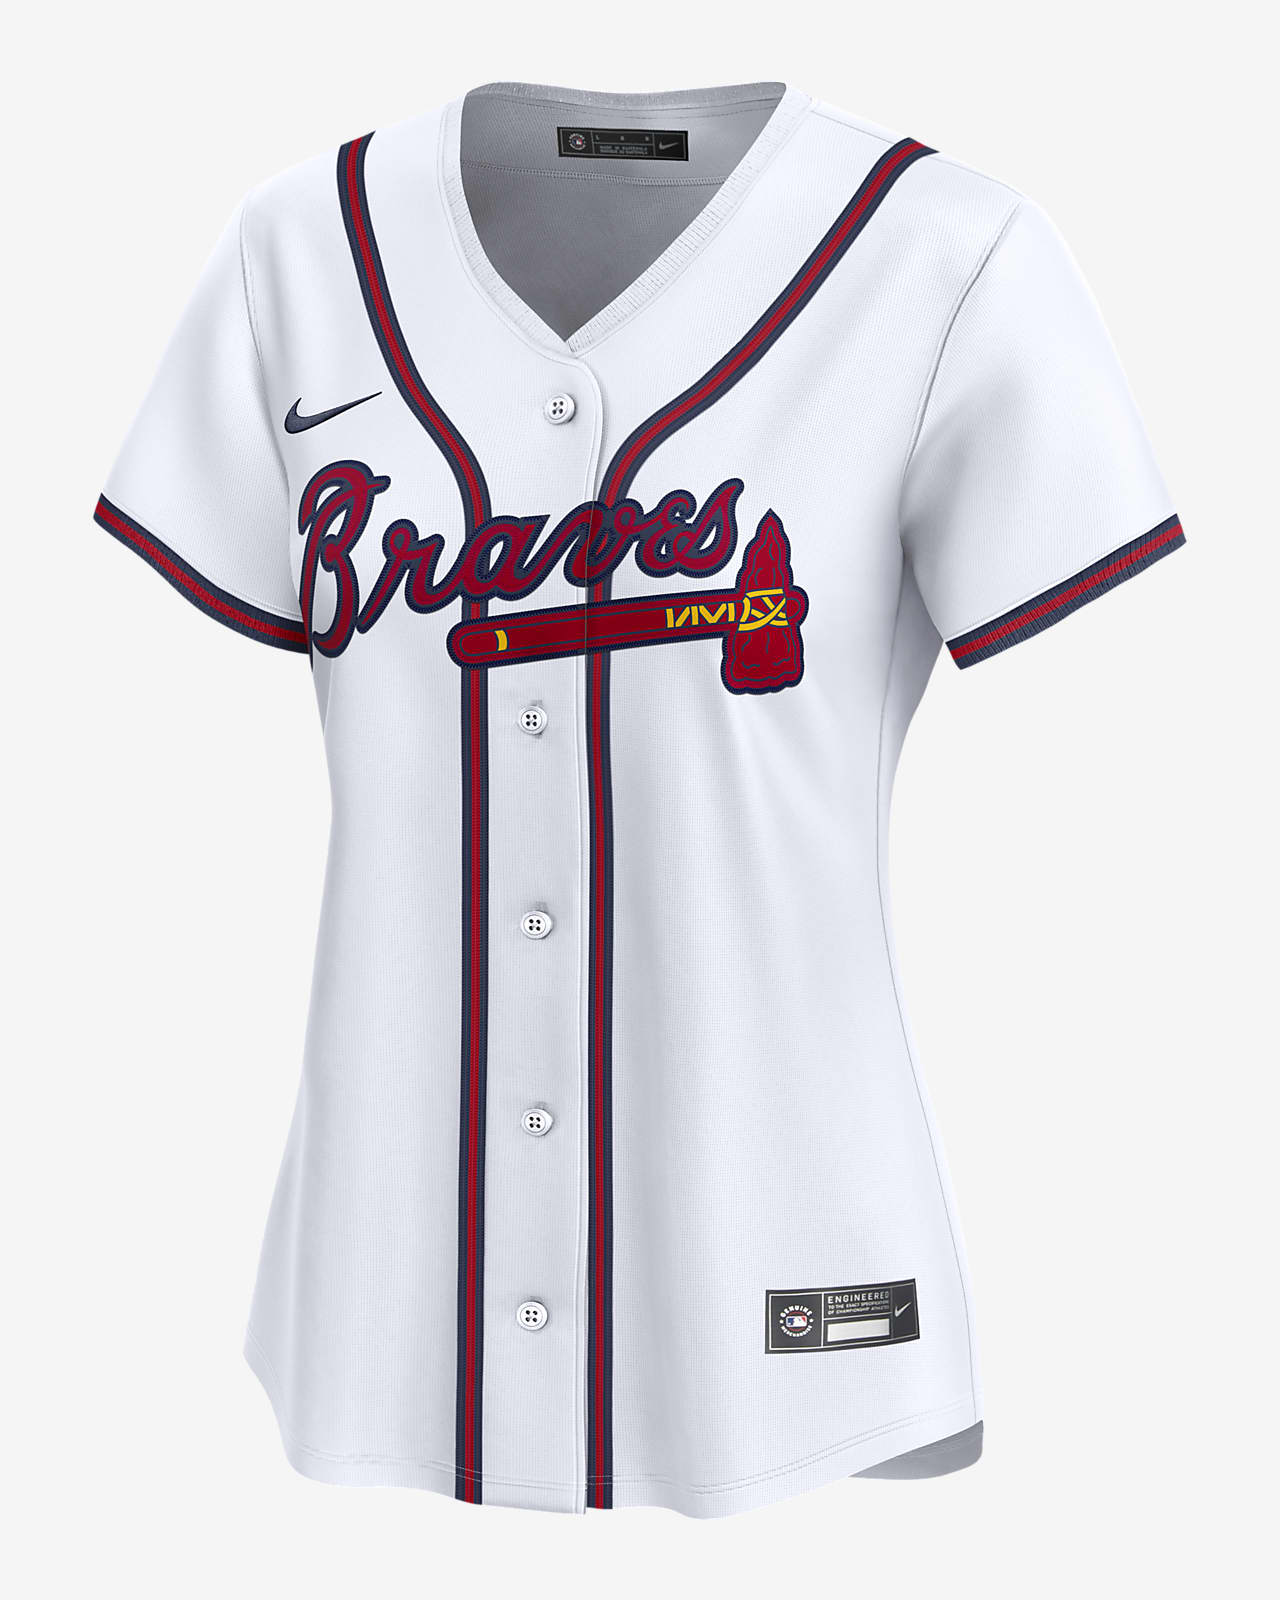 Ozzie Albies Atlanta Braves Women's Nike Dri-FIT ADV MLB Limited Jersey